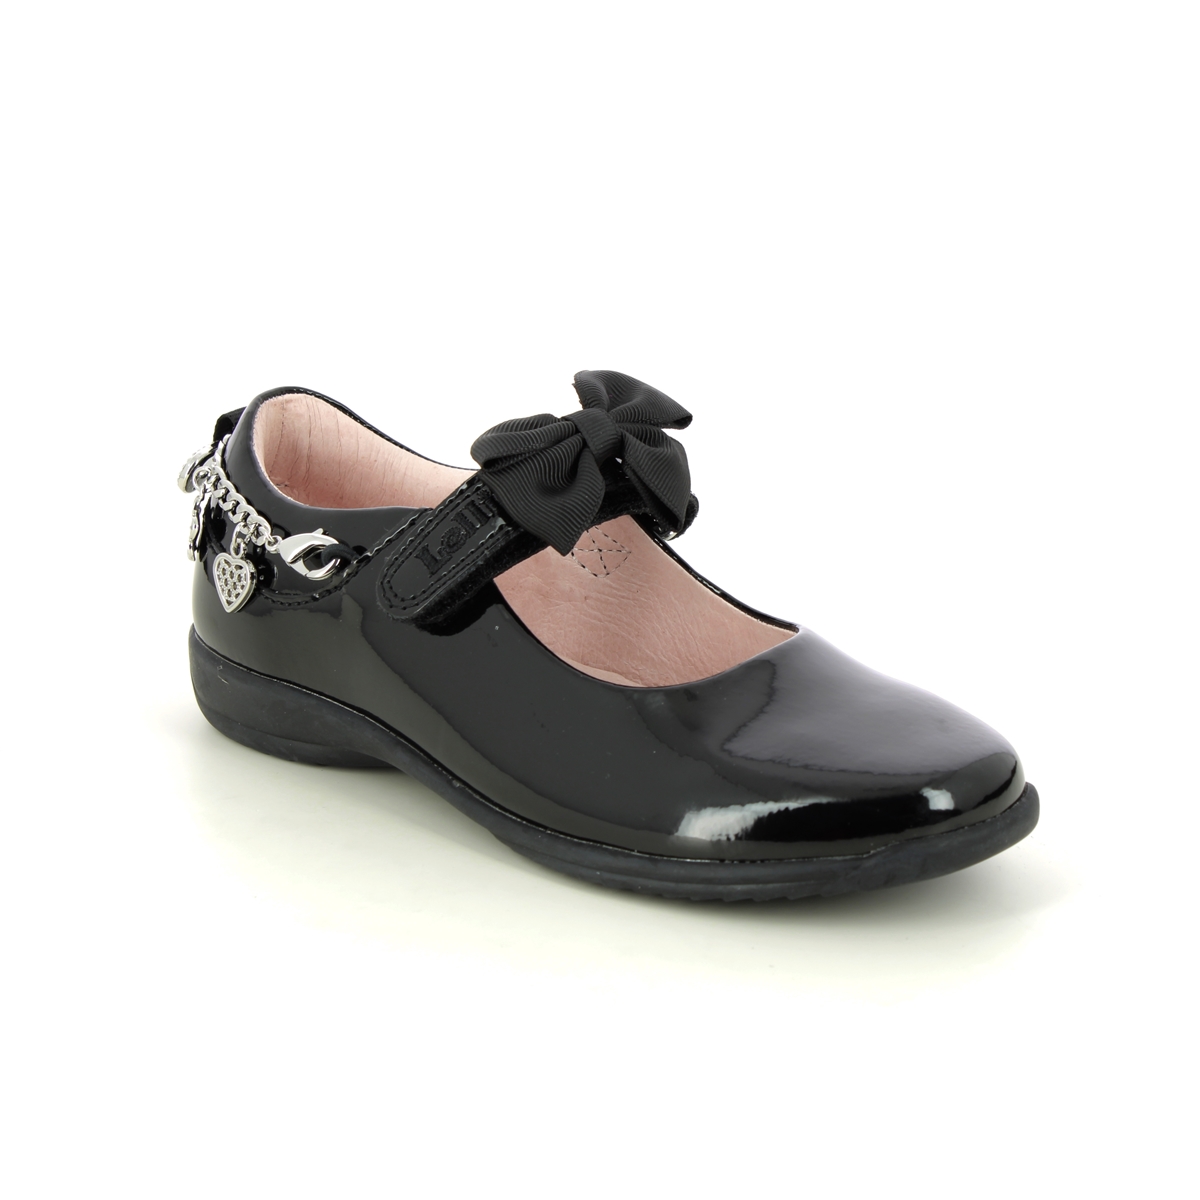 Lelli Kelly - Alicia Bracelet F In Black Patent Lk8219-Db01 In Size 27 In Plain Black Patent Girls Shoes  In Black Patent For School For kids